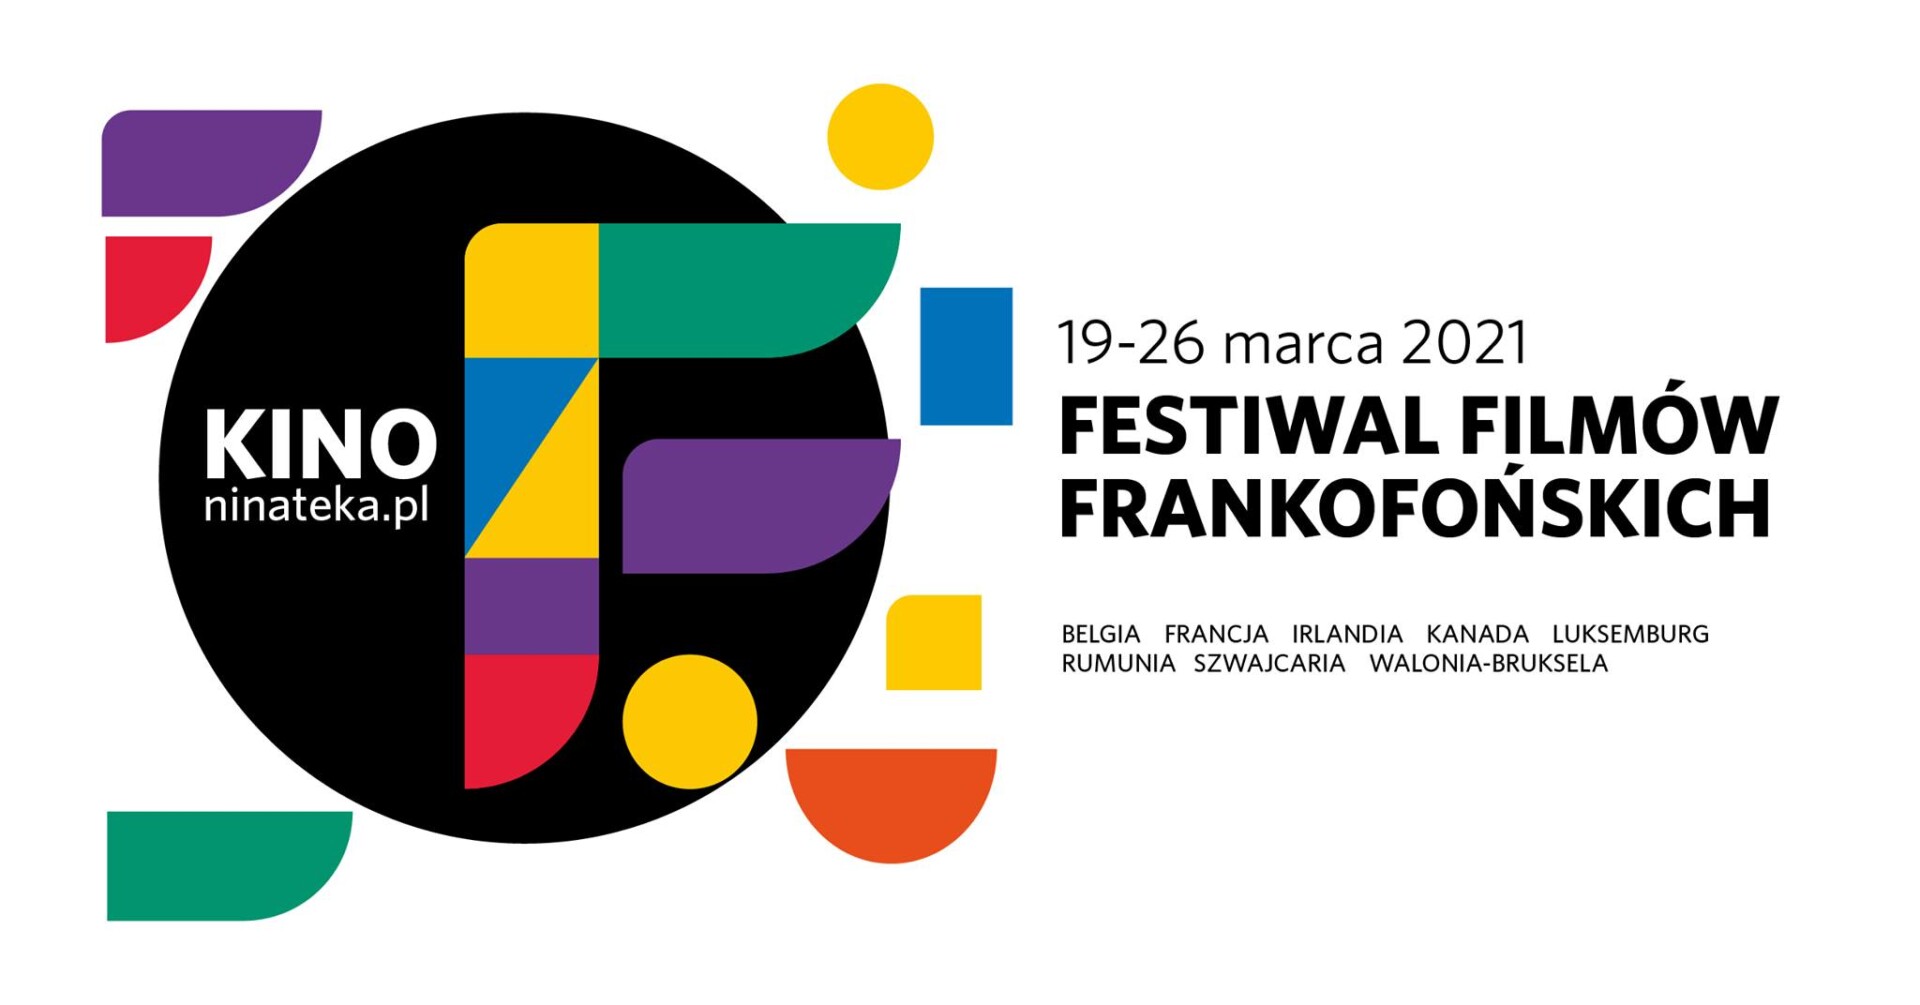 Francophone Film Festival - March 19-26 at Nintendo Site!

